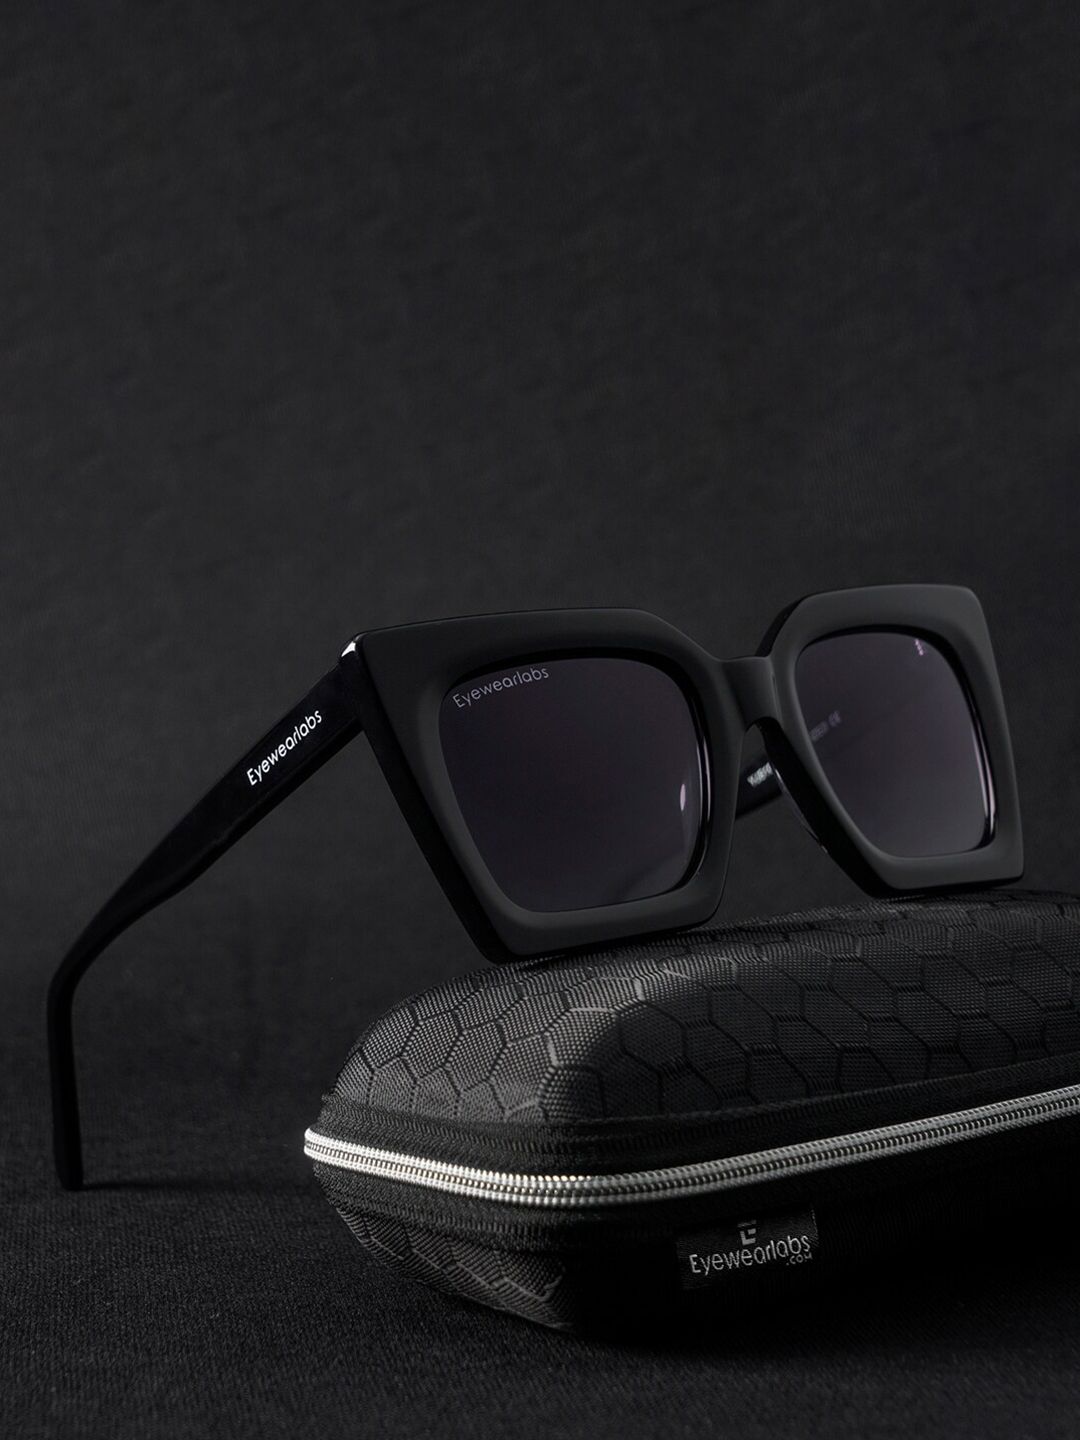 AISLIN UV Protected Cat eye/Oval Sunglasses for Women Stylish - (Black Lens | Black-Gold Frame | Large Size)